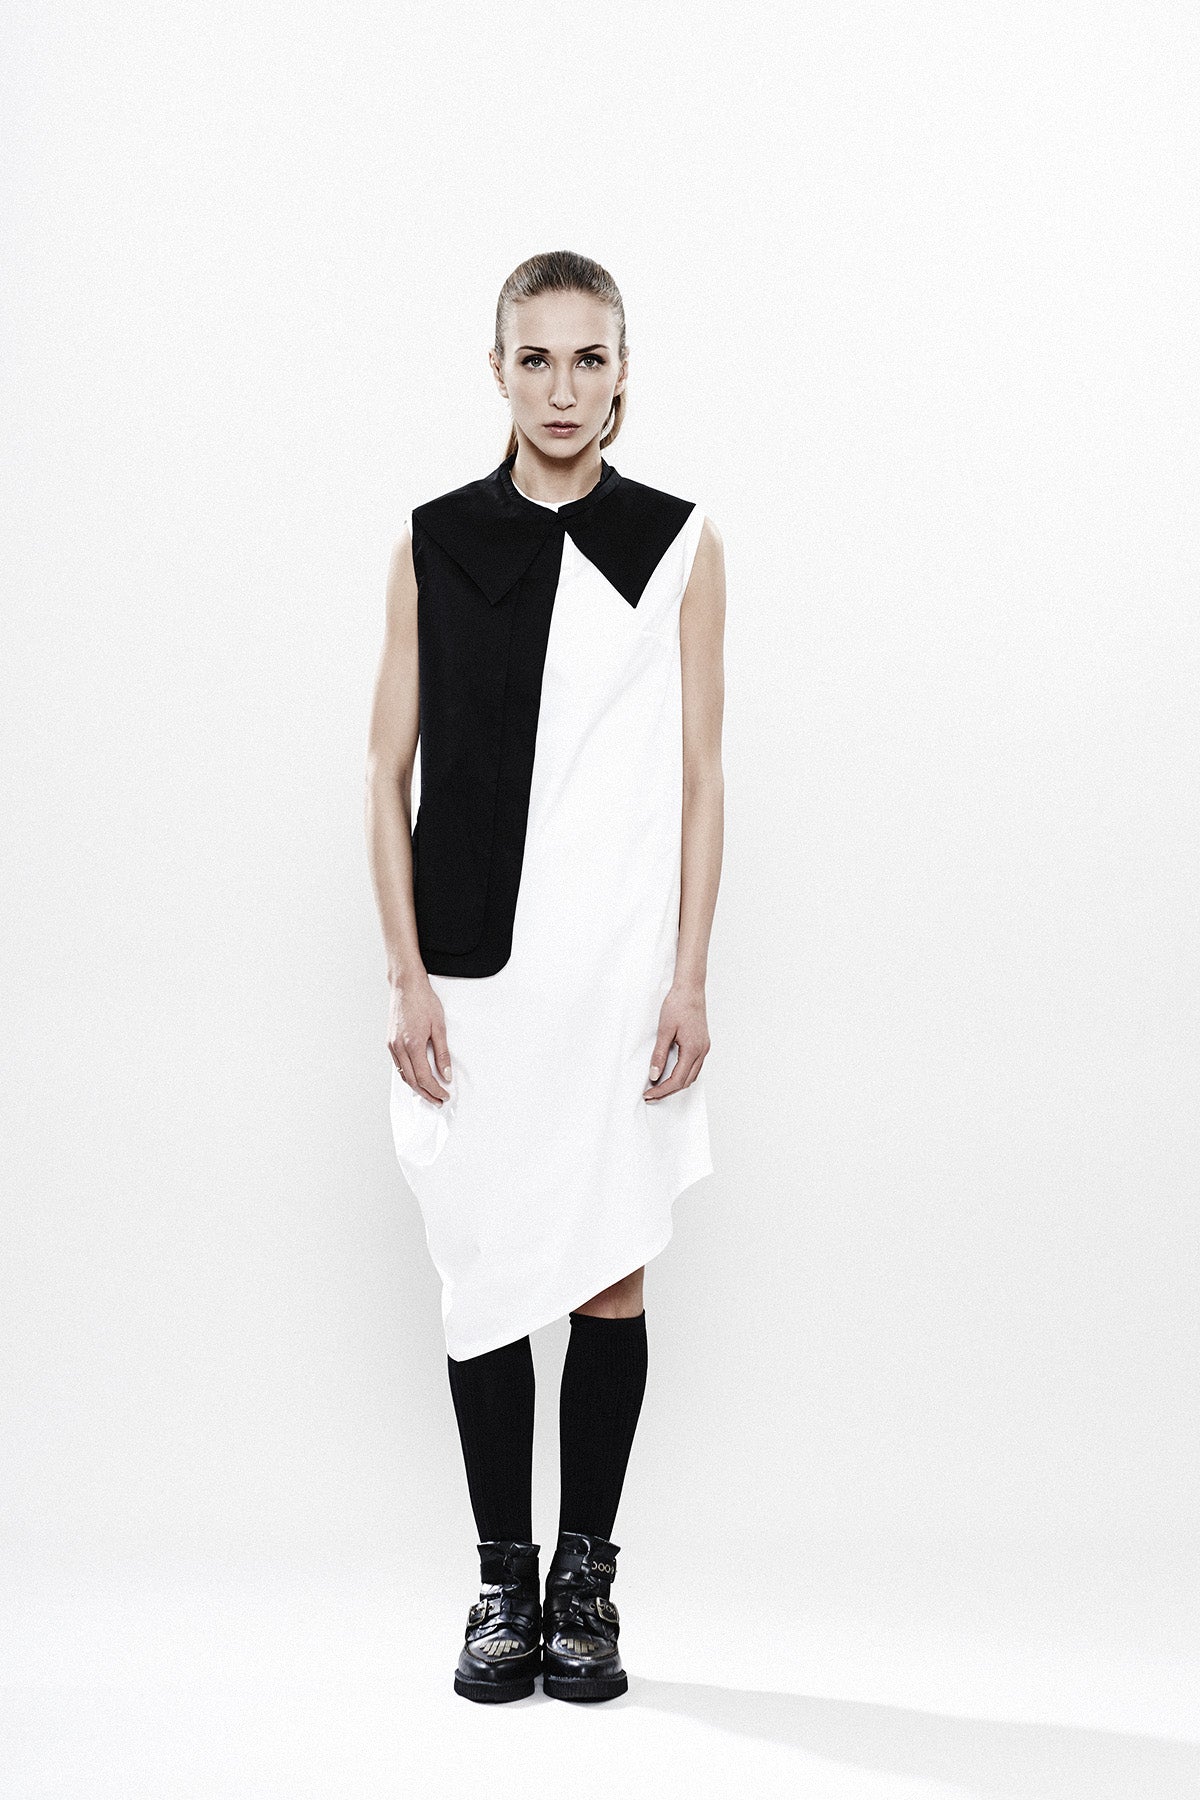 White Asymmetrical Dress with Black Jabot